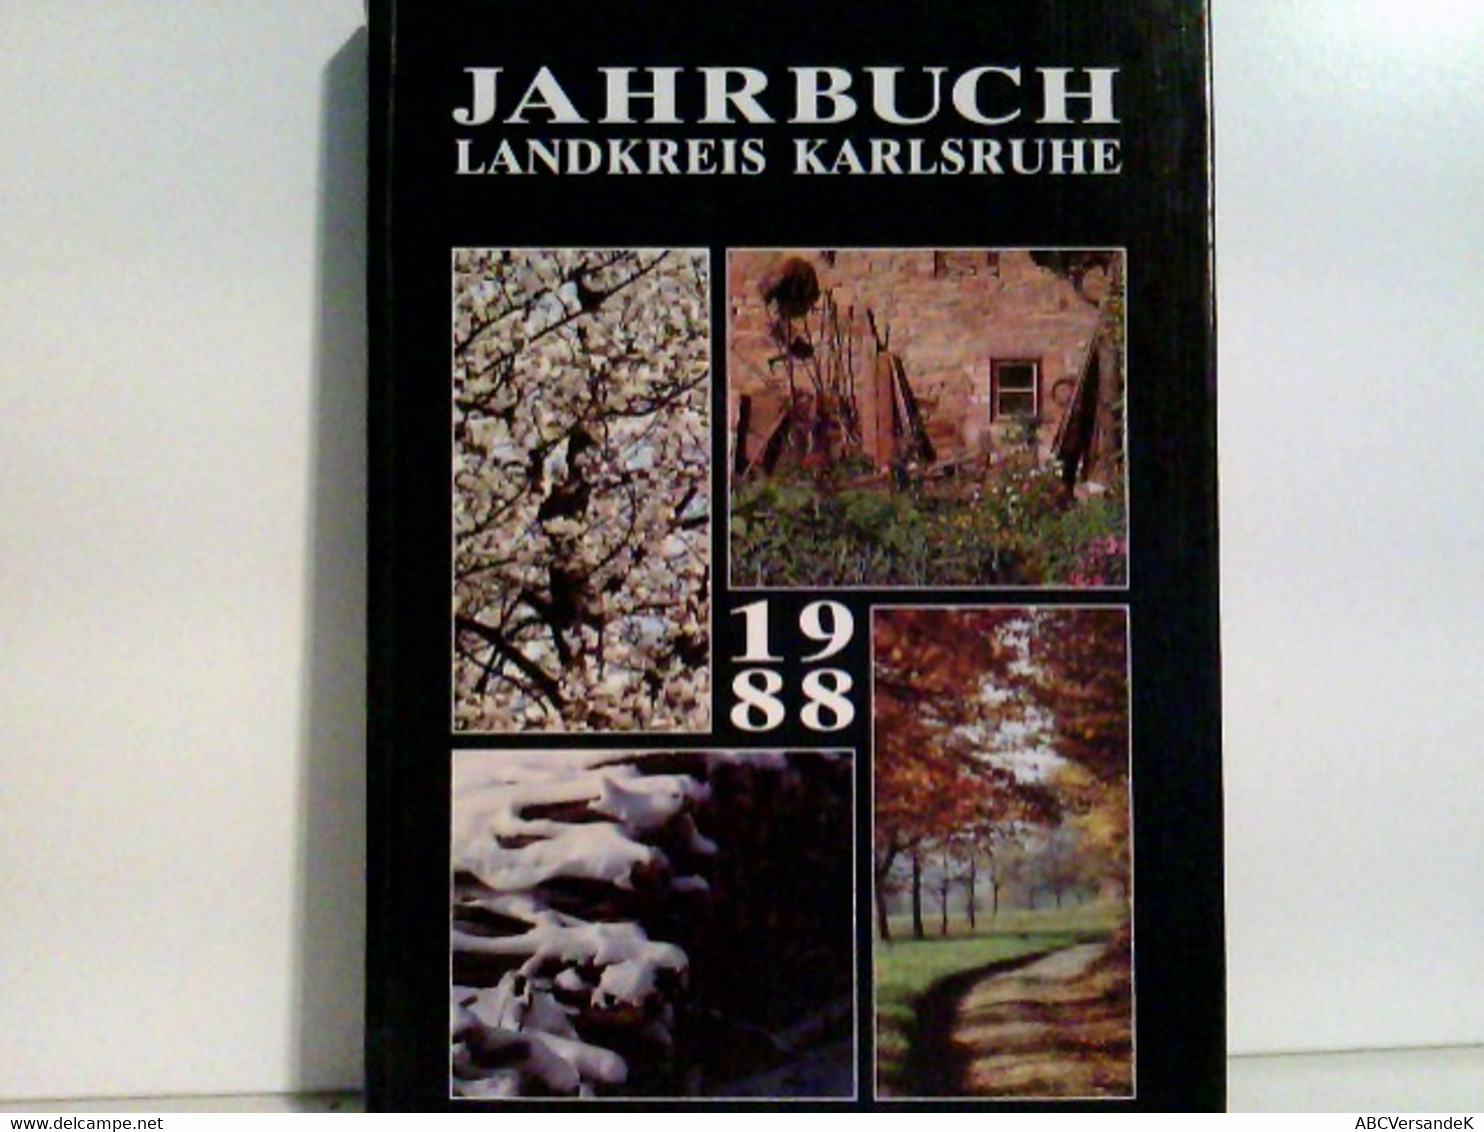 Jahrbuch Landkreis Karlsruhe 1988 - Calendars